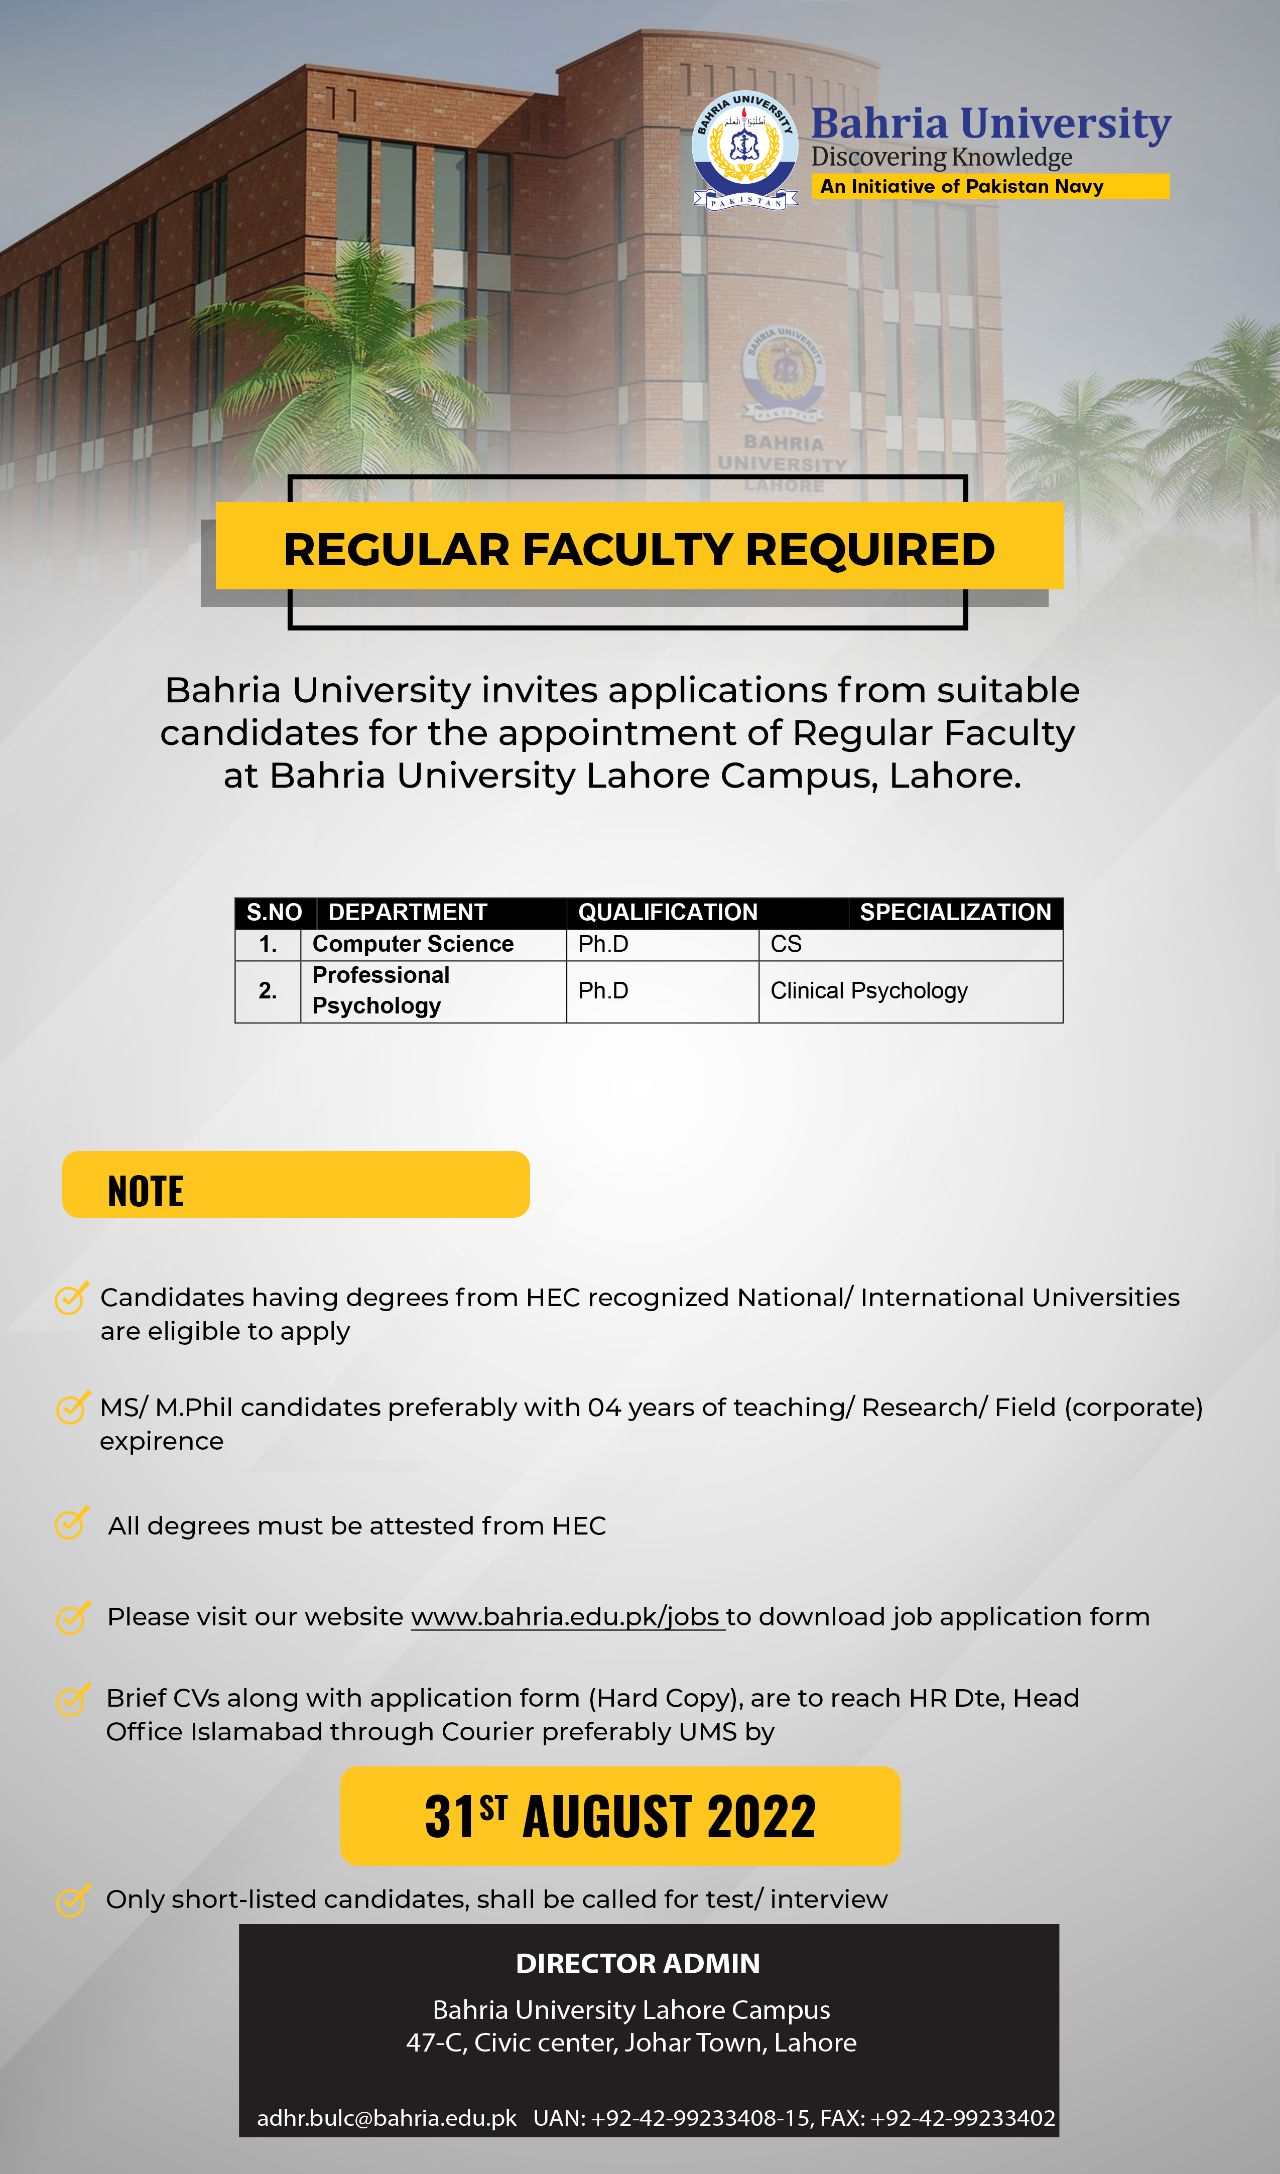 Bahria University Announced Jobs August 2022